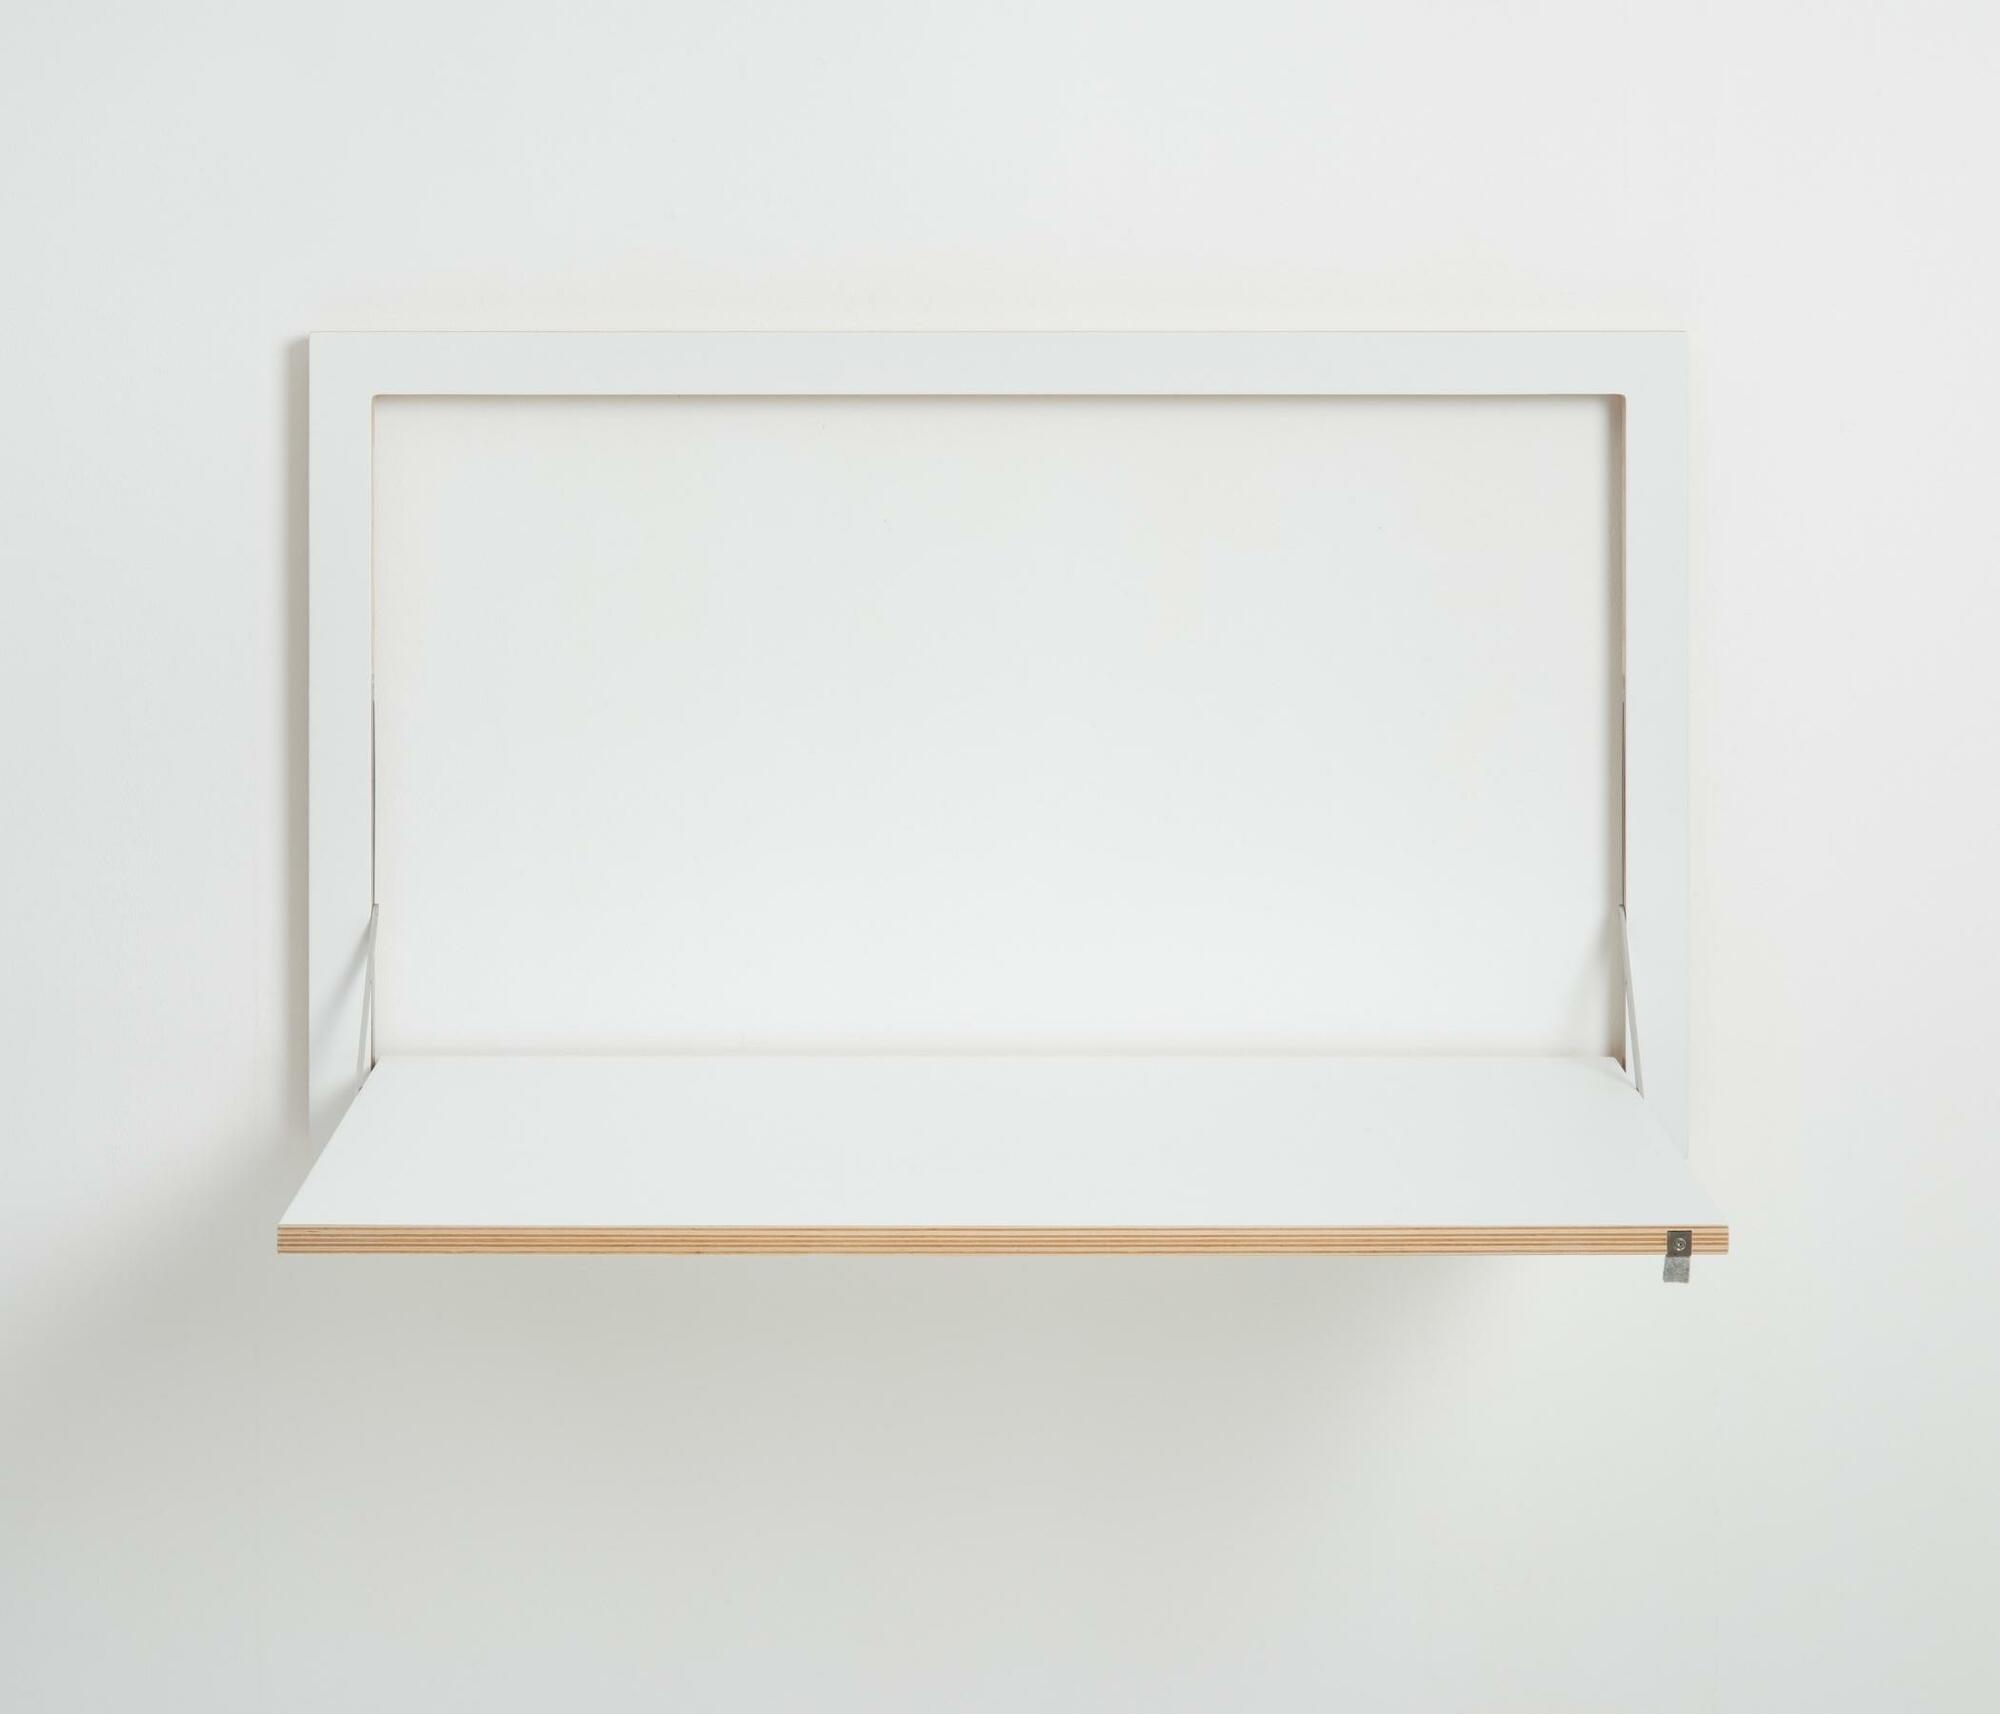 Fläpps Sekretär Holz Weiß 100 x 60 cm 1